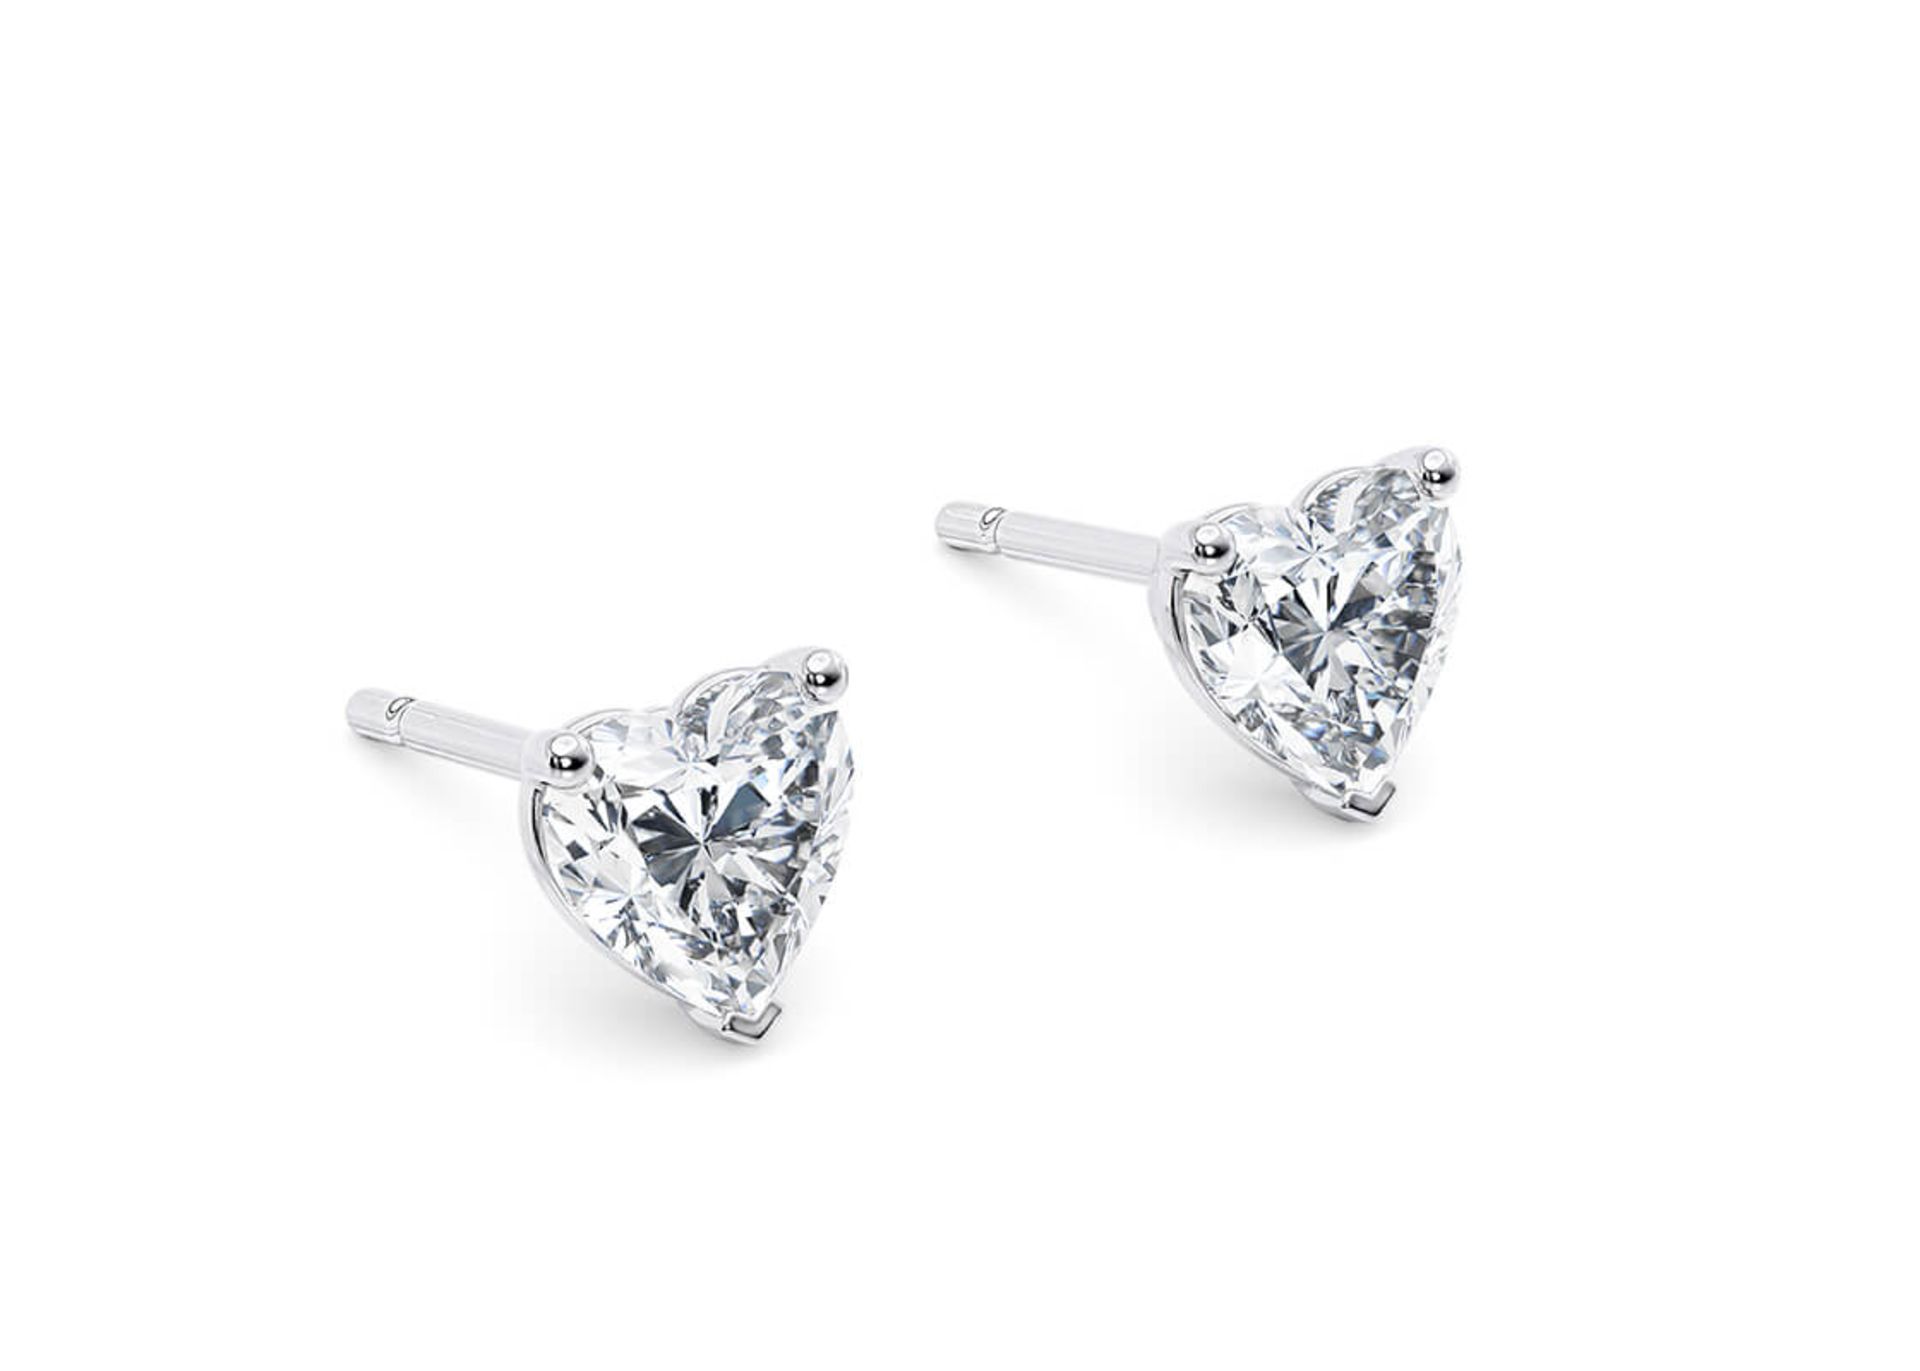 Heart Cut 4.00 Carat Diamond Earrings Set in 18kt White Gold - D Colour SI1 Clarity - IGI - Image 2 of 3